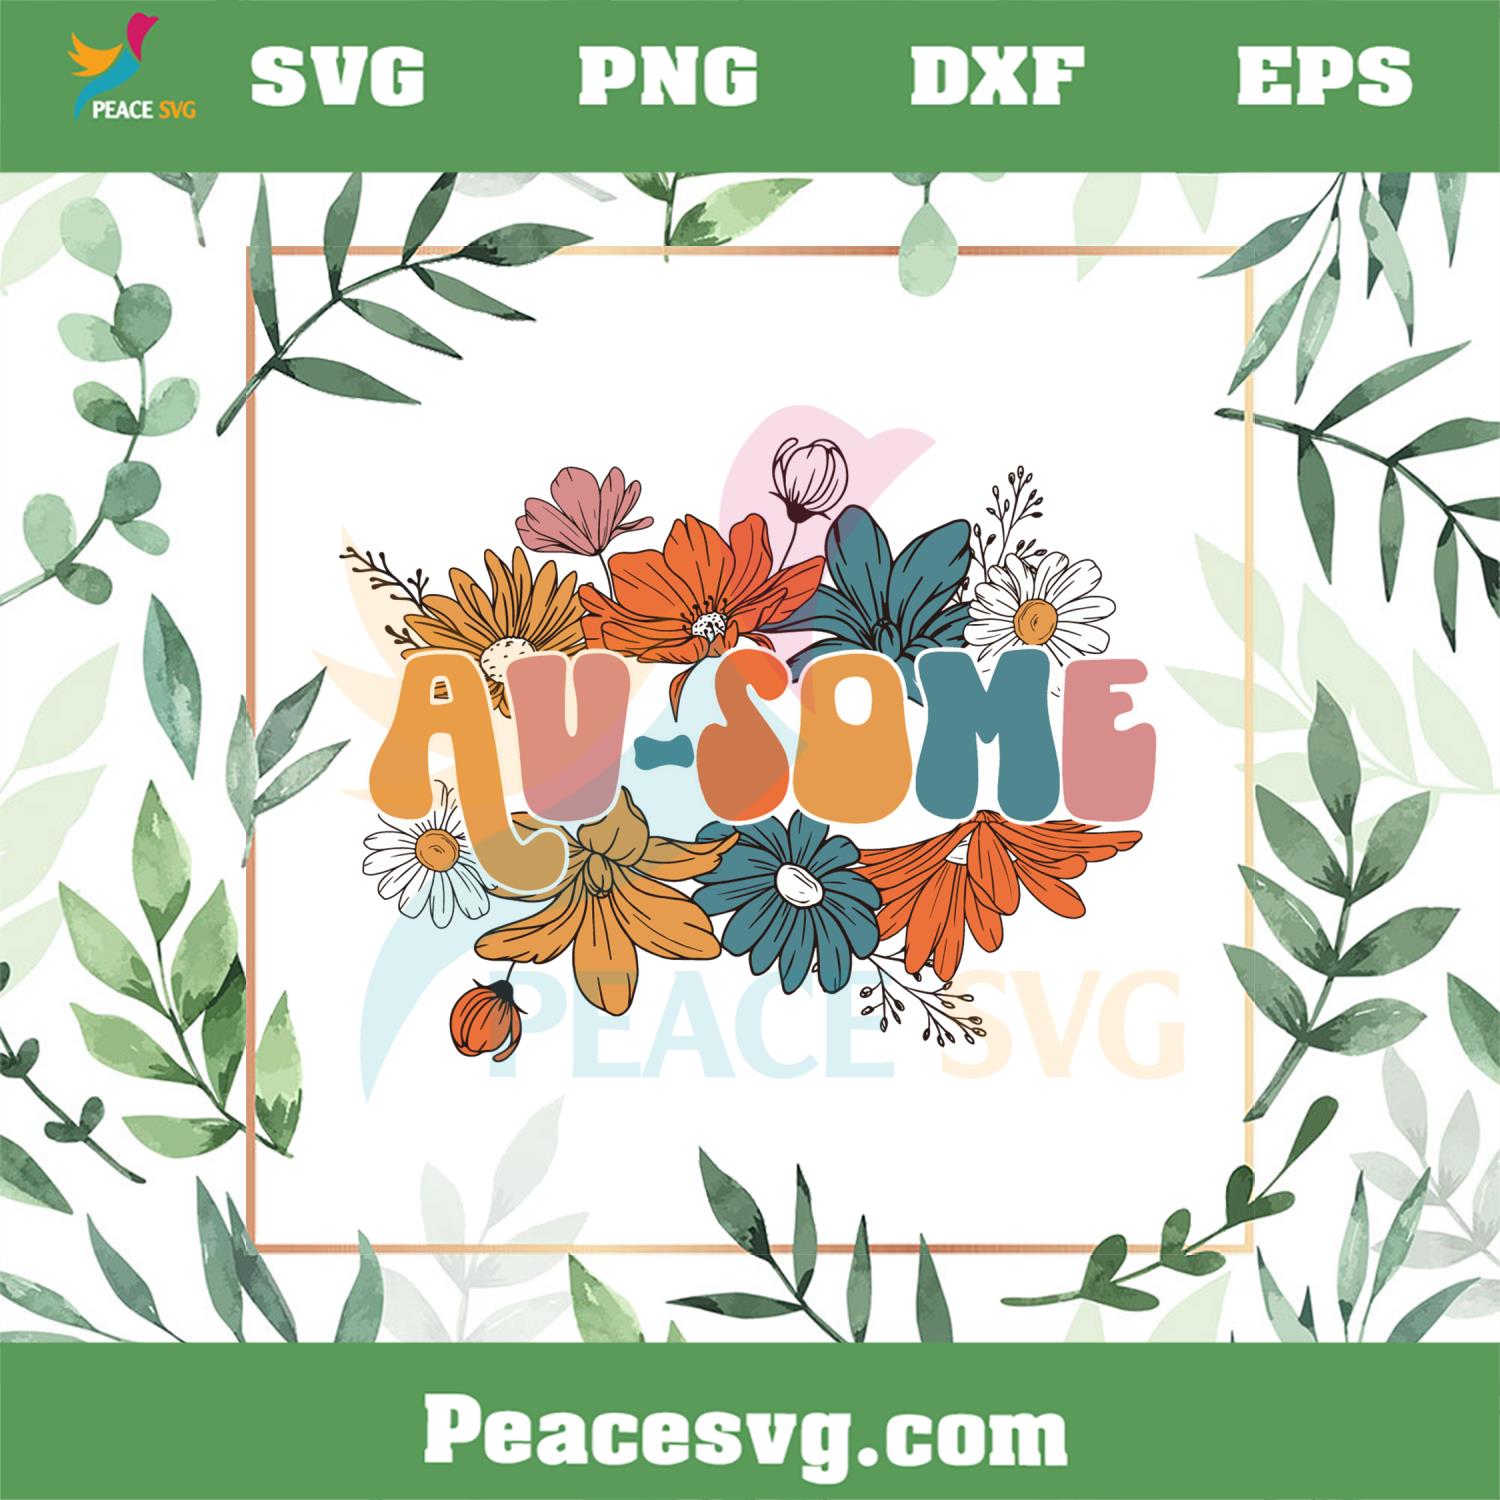 Ausome Floral Autism Awareness SVG Graphic Designs Files